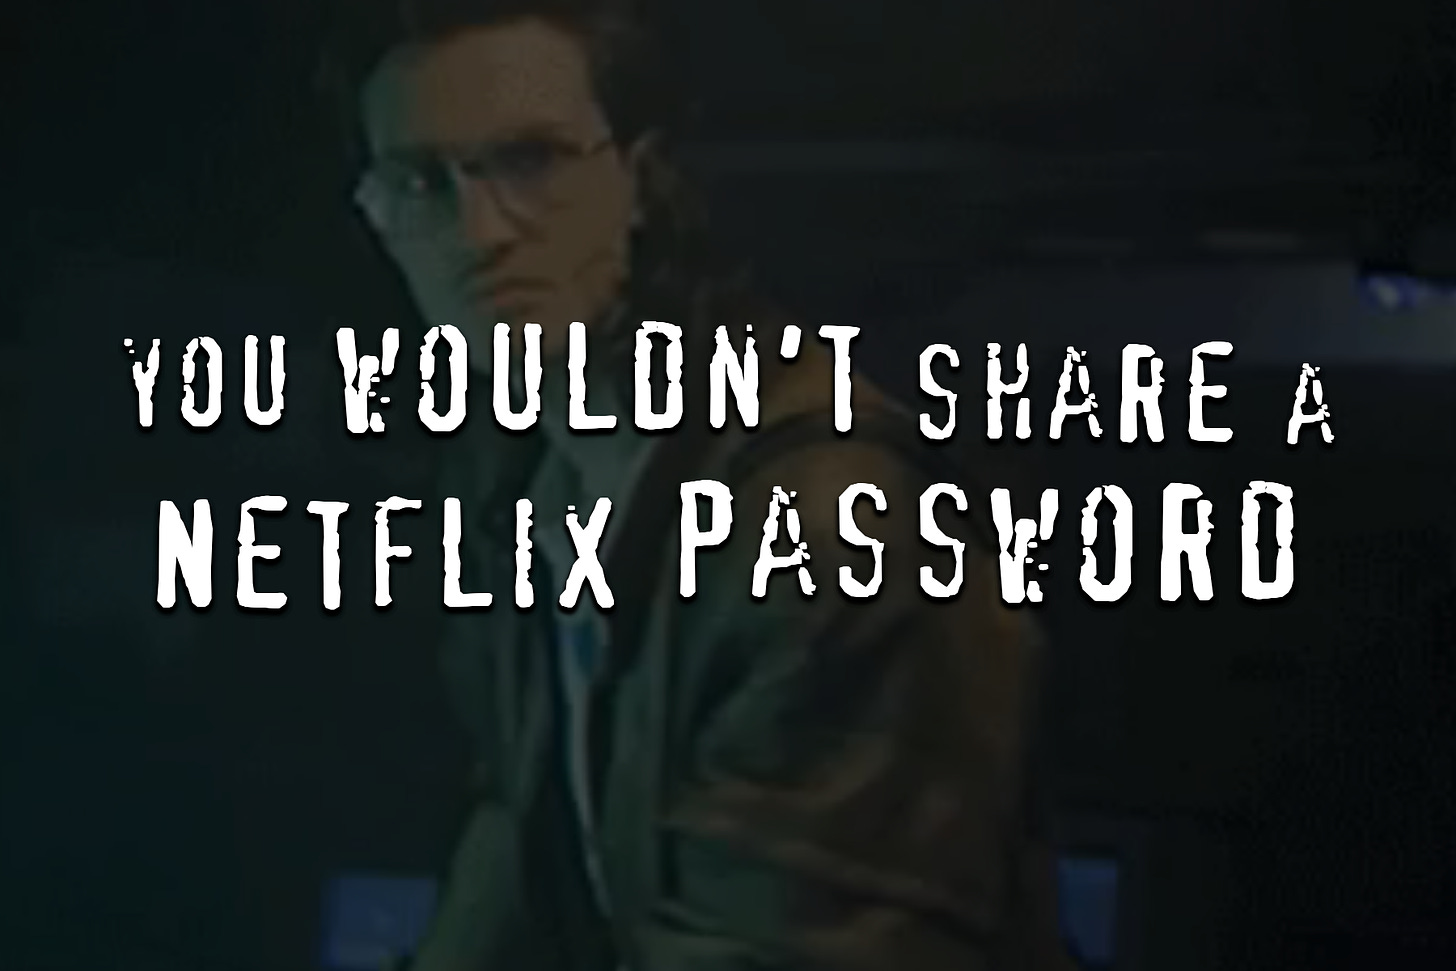 Paródia ao anúncio anti-pirataria "You wouldn't steal a car" mas com "You wouldn't share a Netflix password".